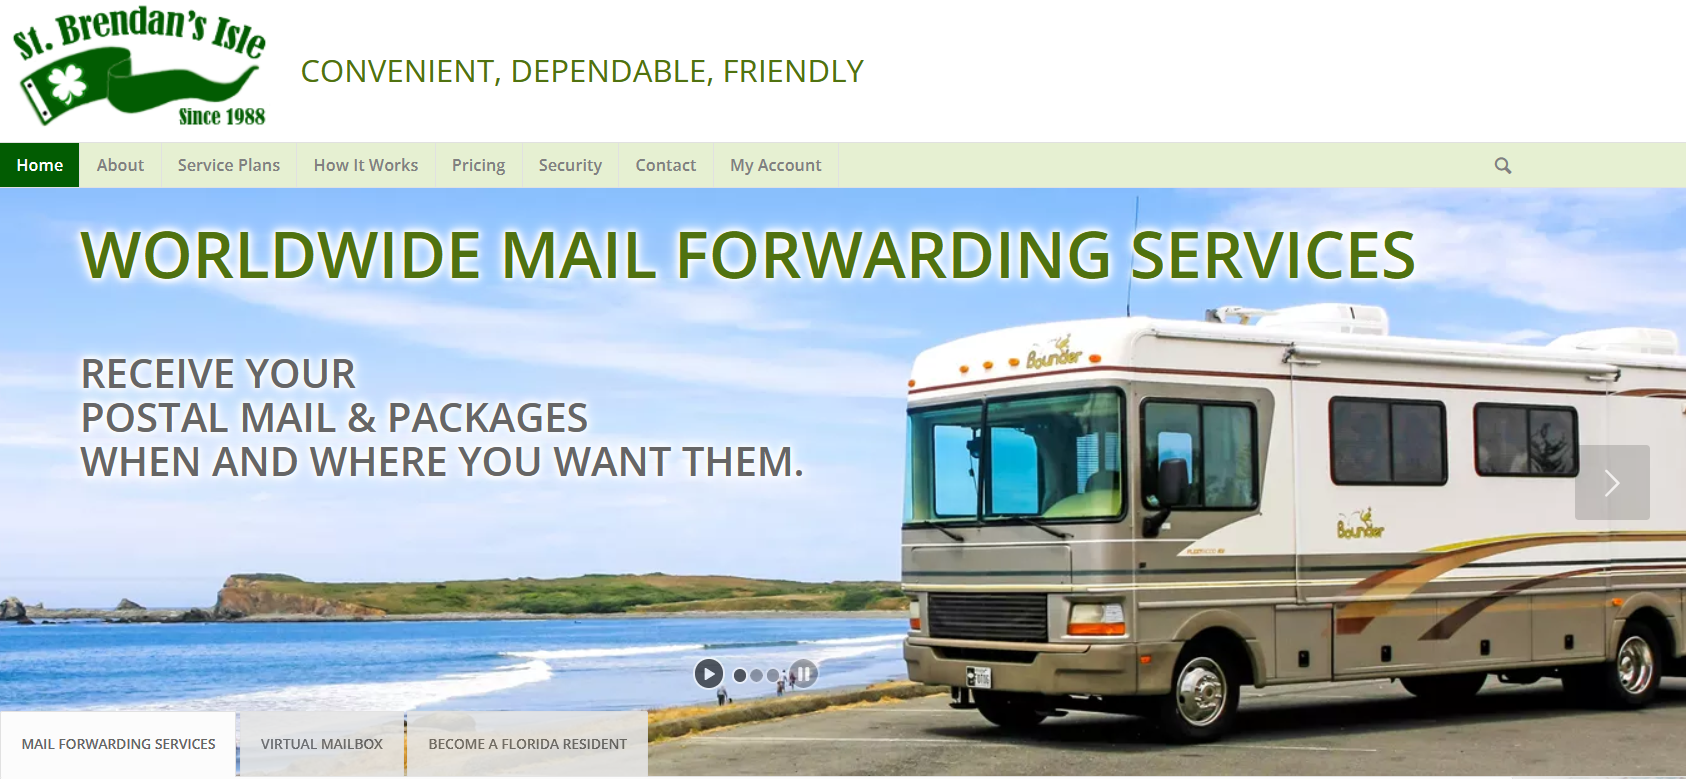 St. Brendan's Isle RV mail forwarding service